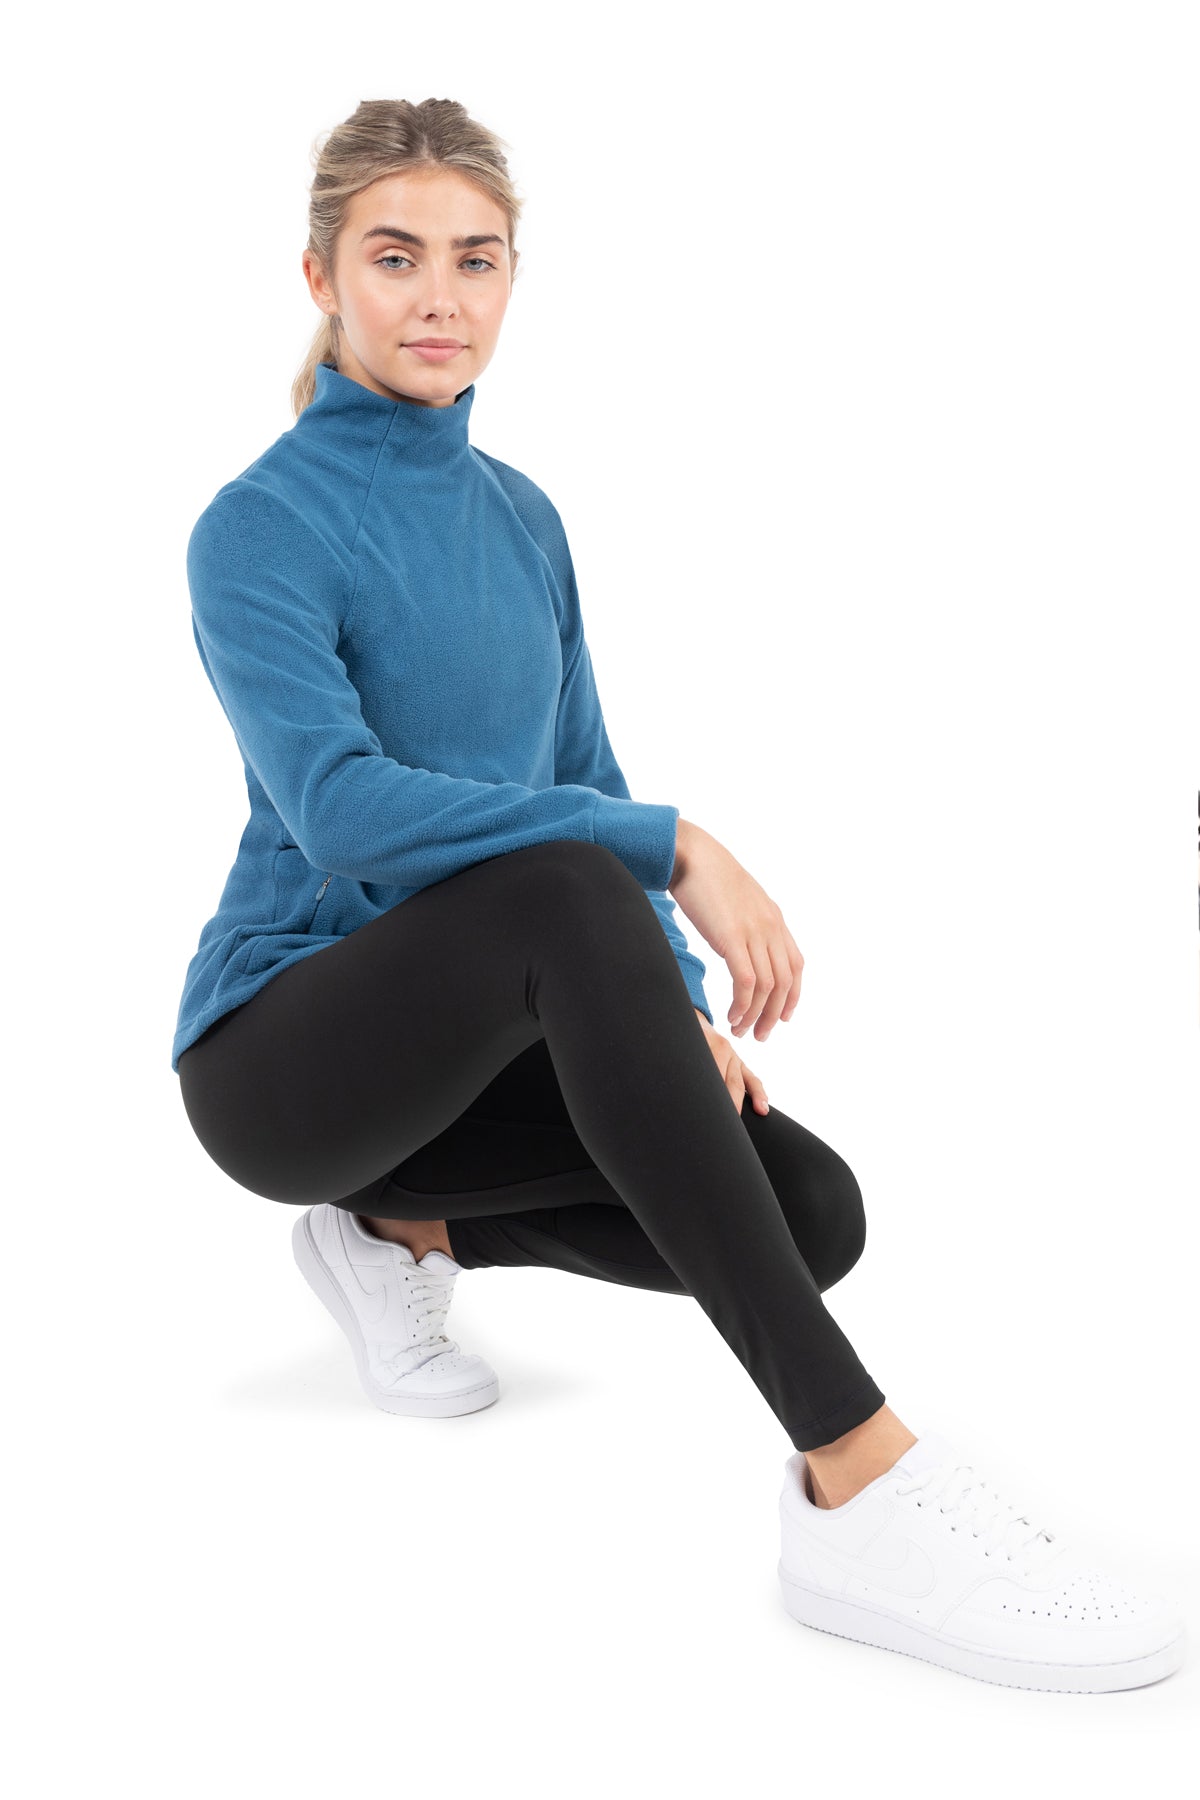 NWT $68 Women Kyodan Yoga Active Running Leggings Gray S M L Core Leggings